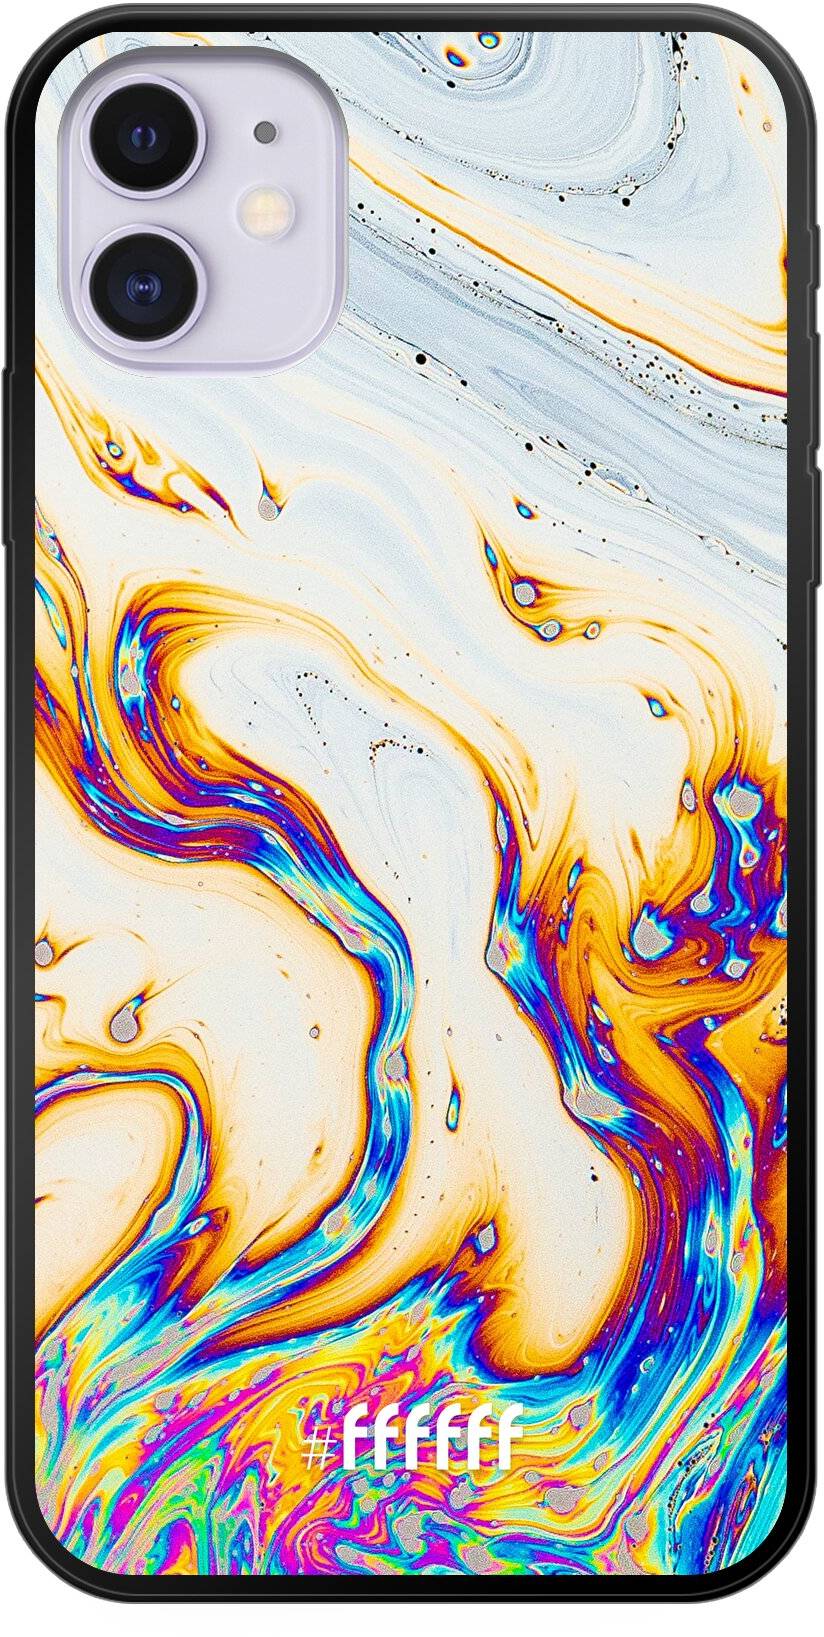 Bubble Texture iPhone 11